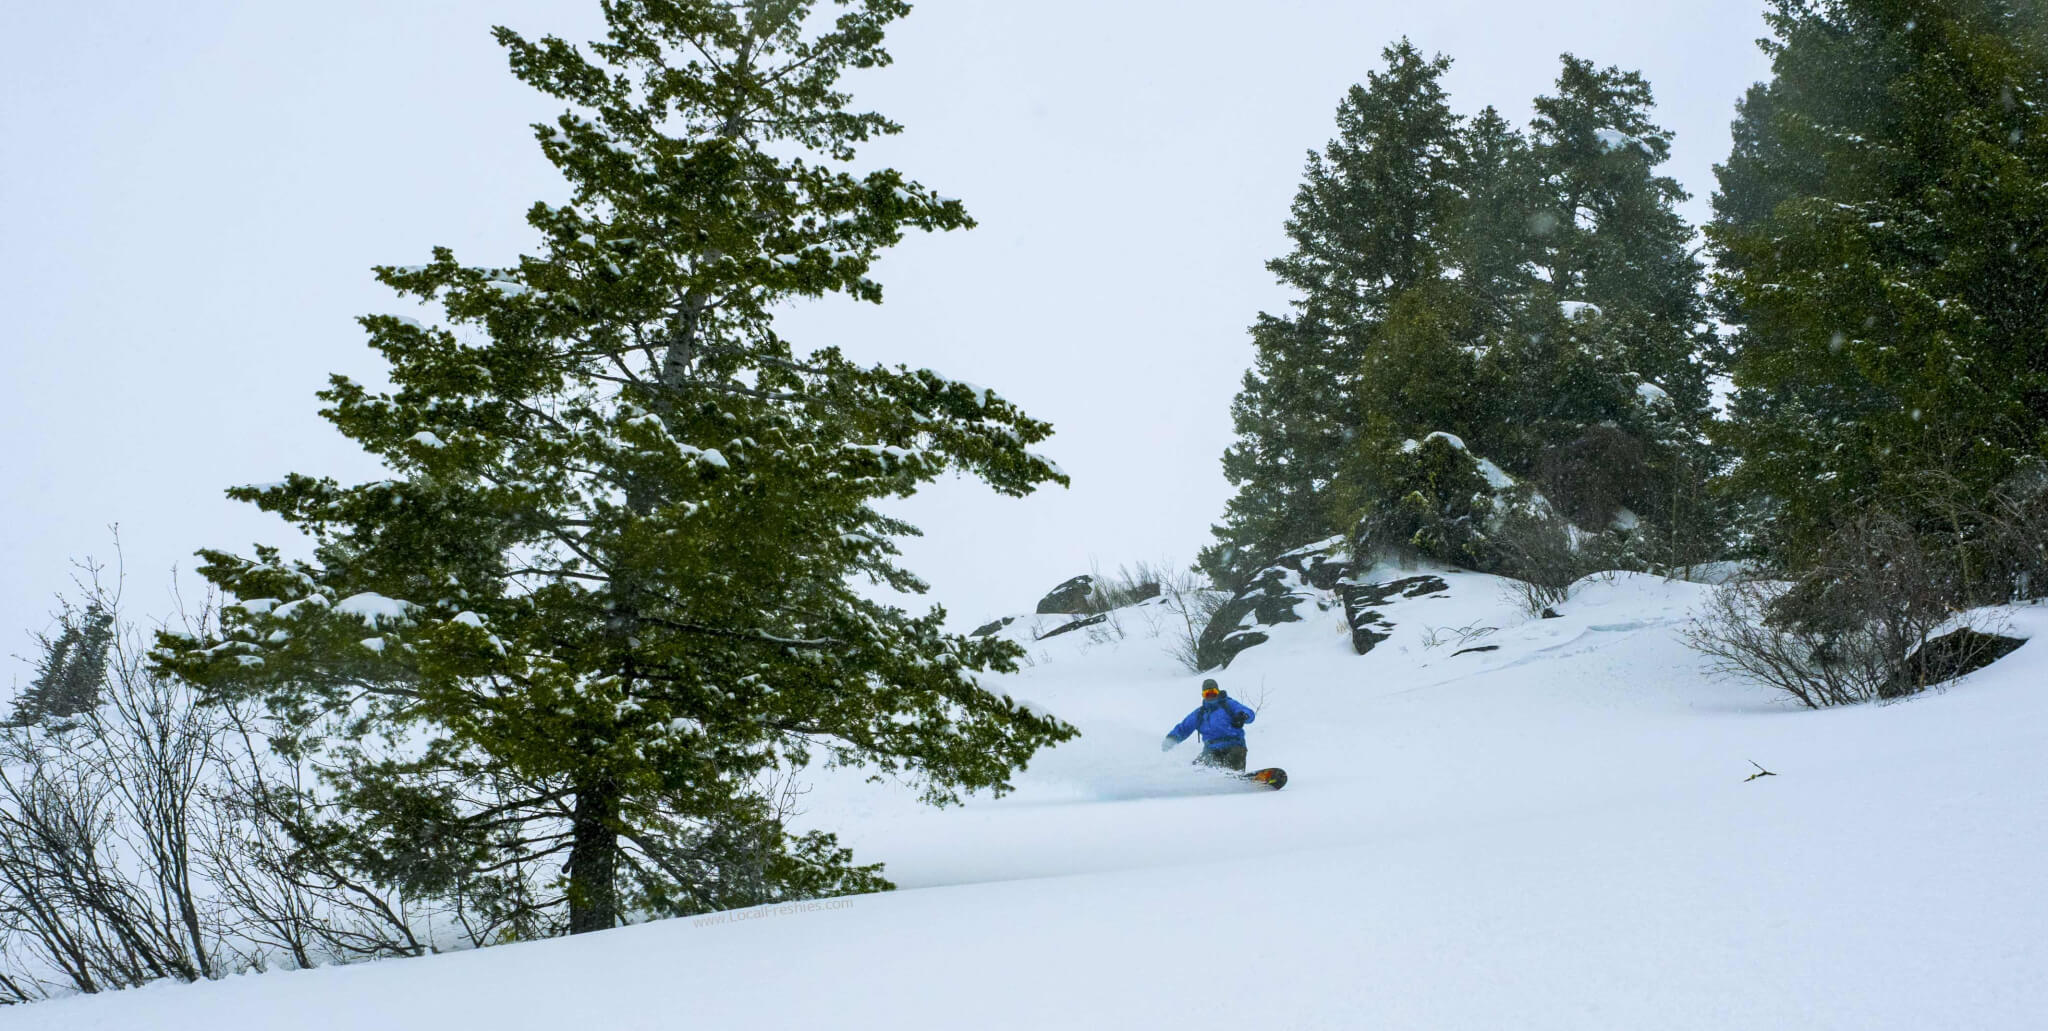 Snowboarding skiing powder at Tamarack Mountain Resort near Donnelly in Northern Idaho